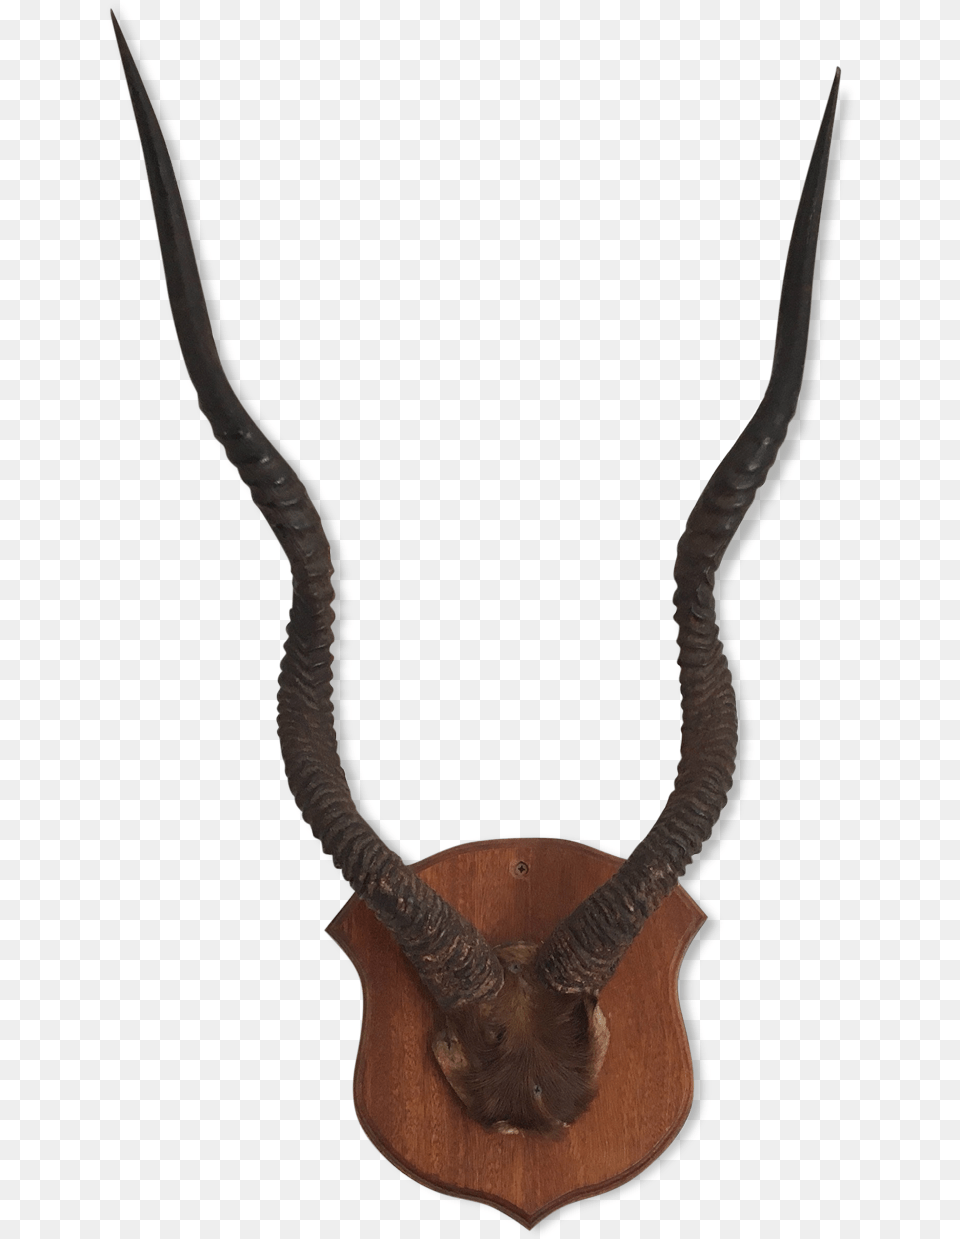 Horn Antelope Or Gazelle Horns Corne De Gazelle Animale, Animal, Impala, Mammal, Wildlife Png